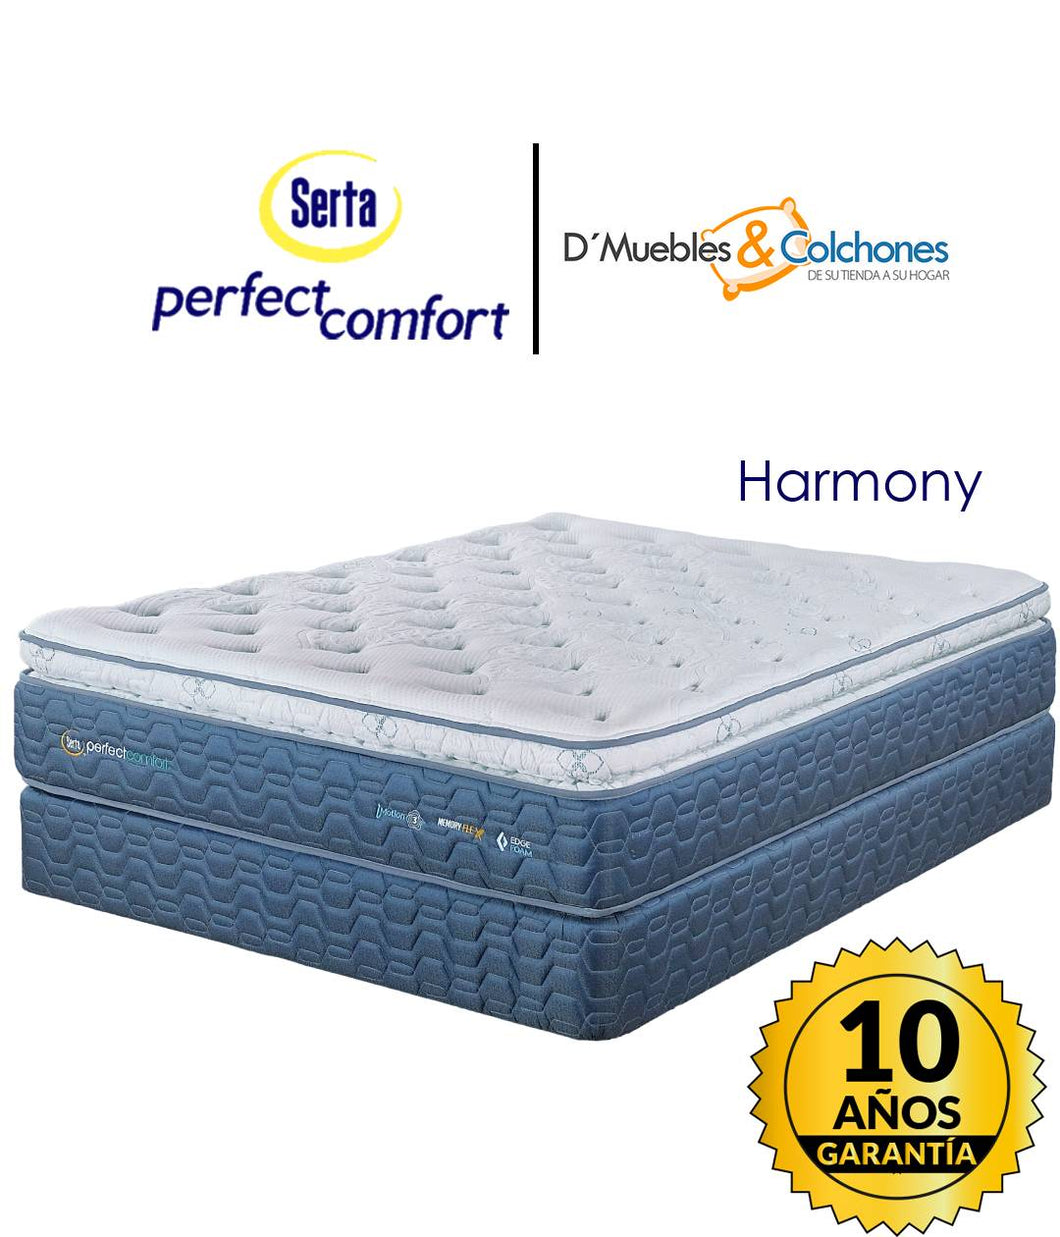 Serta Perfect Comfort - Harmony